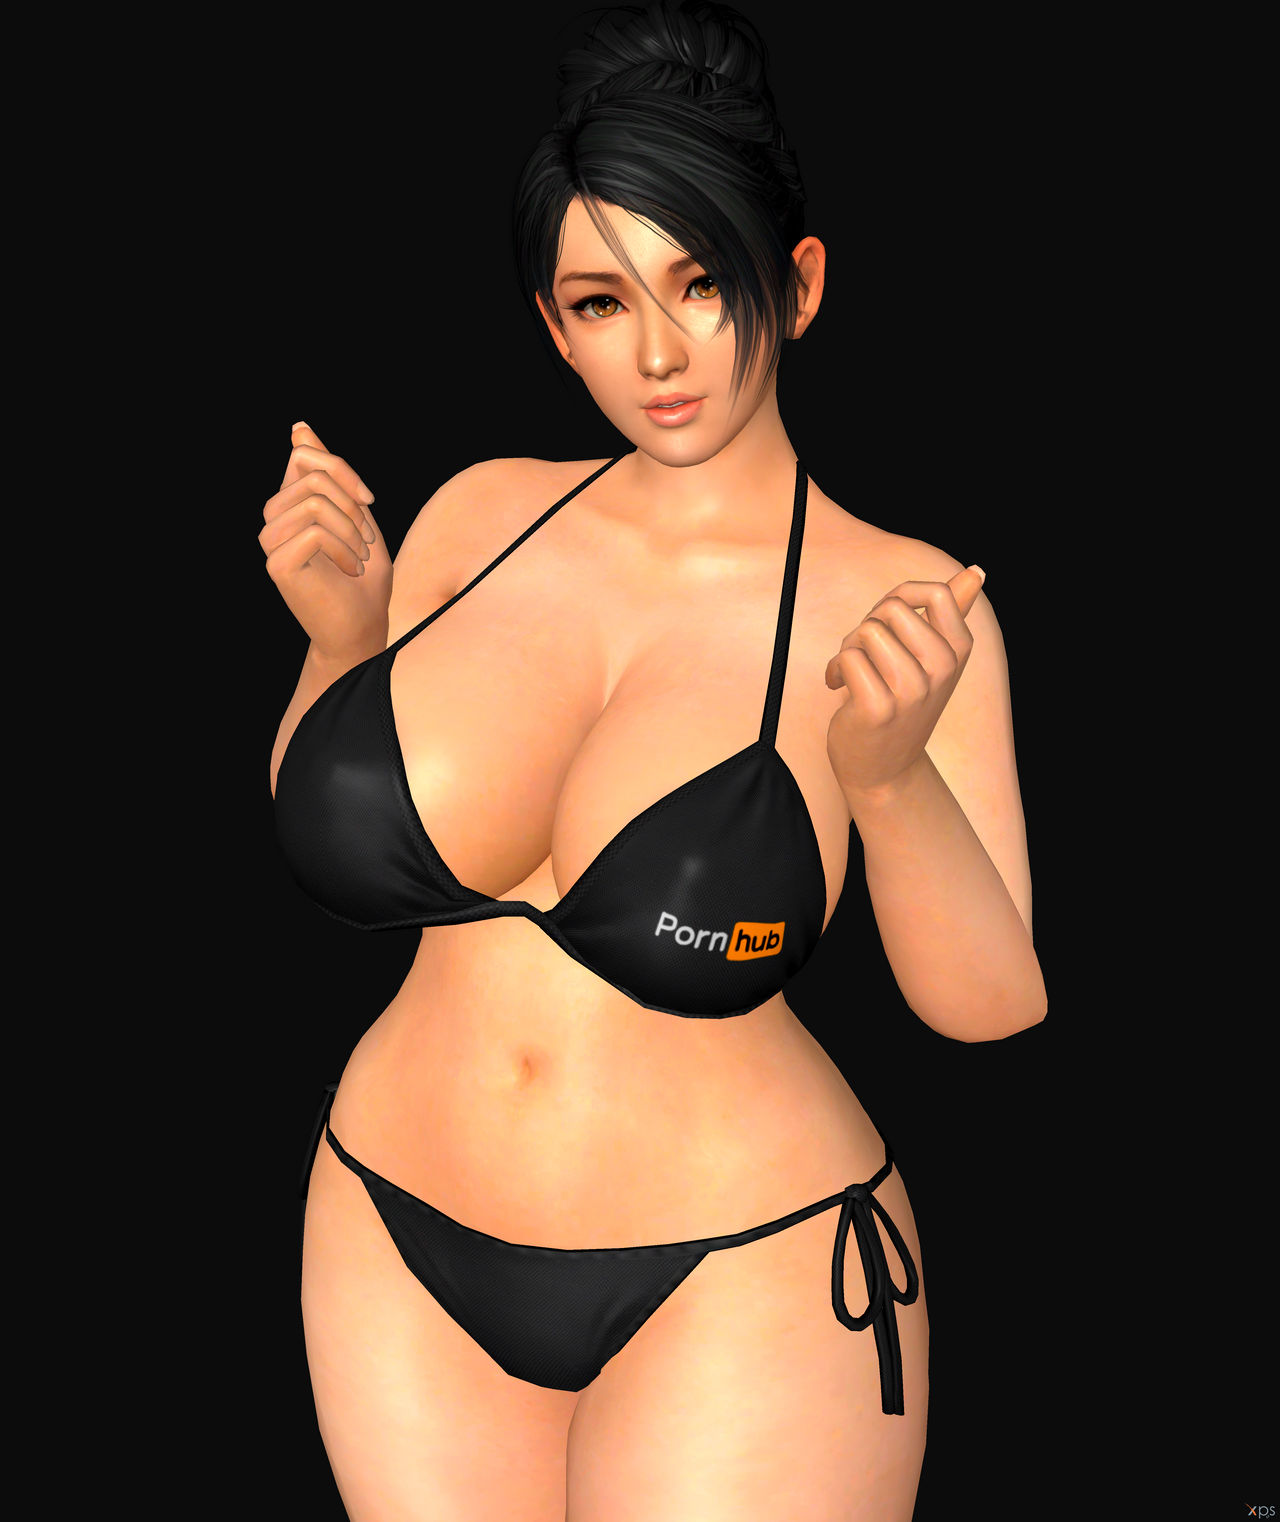 Momiji - PornHub Bikini... by Chiro27 on DeviantArt.